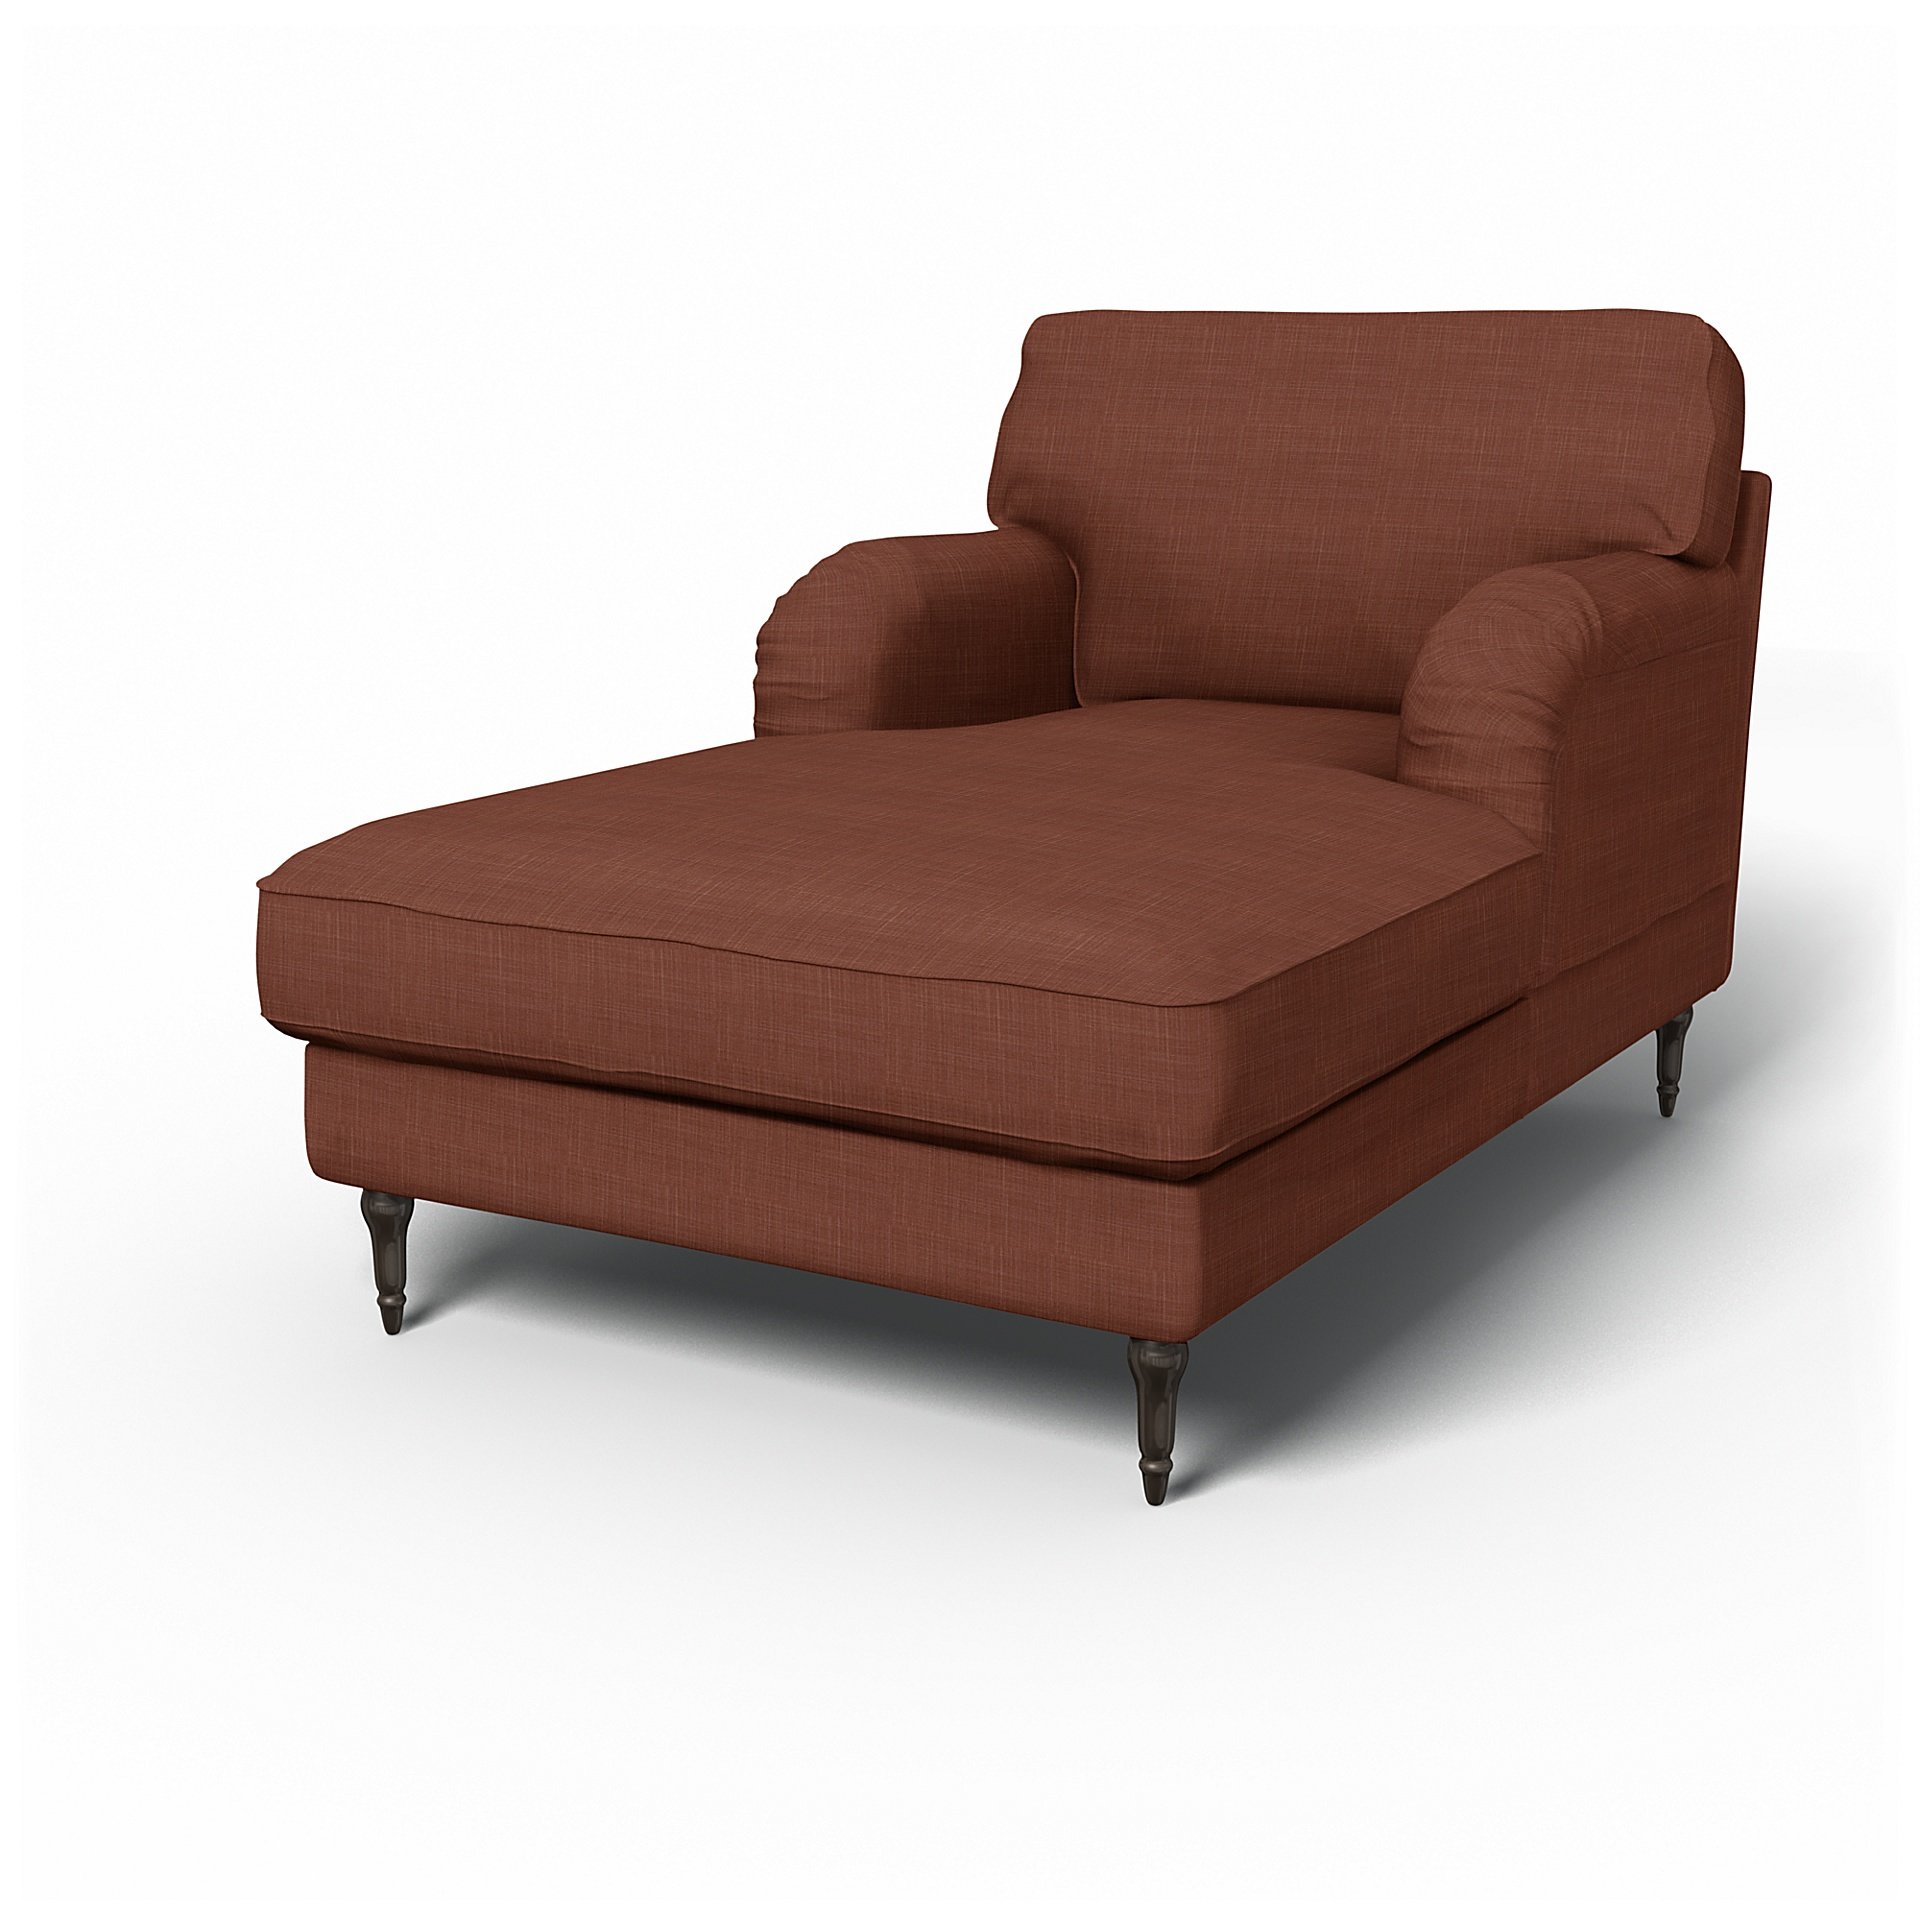 IKEA - Stocksund Chaise Longue Cover, Rust, Boucle & Texture - Bemz